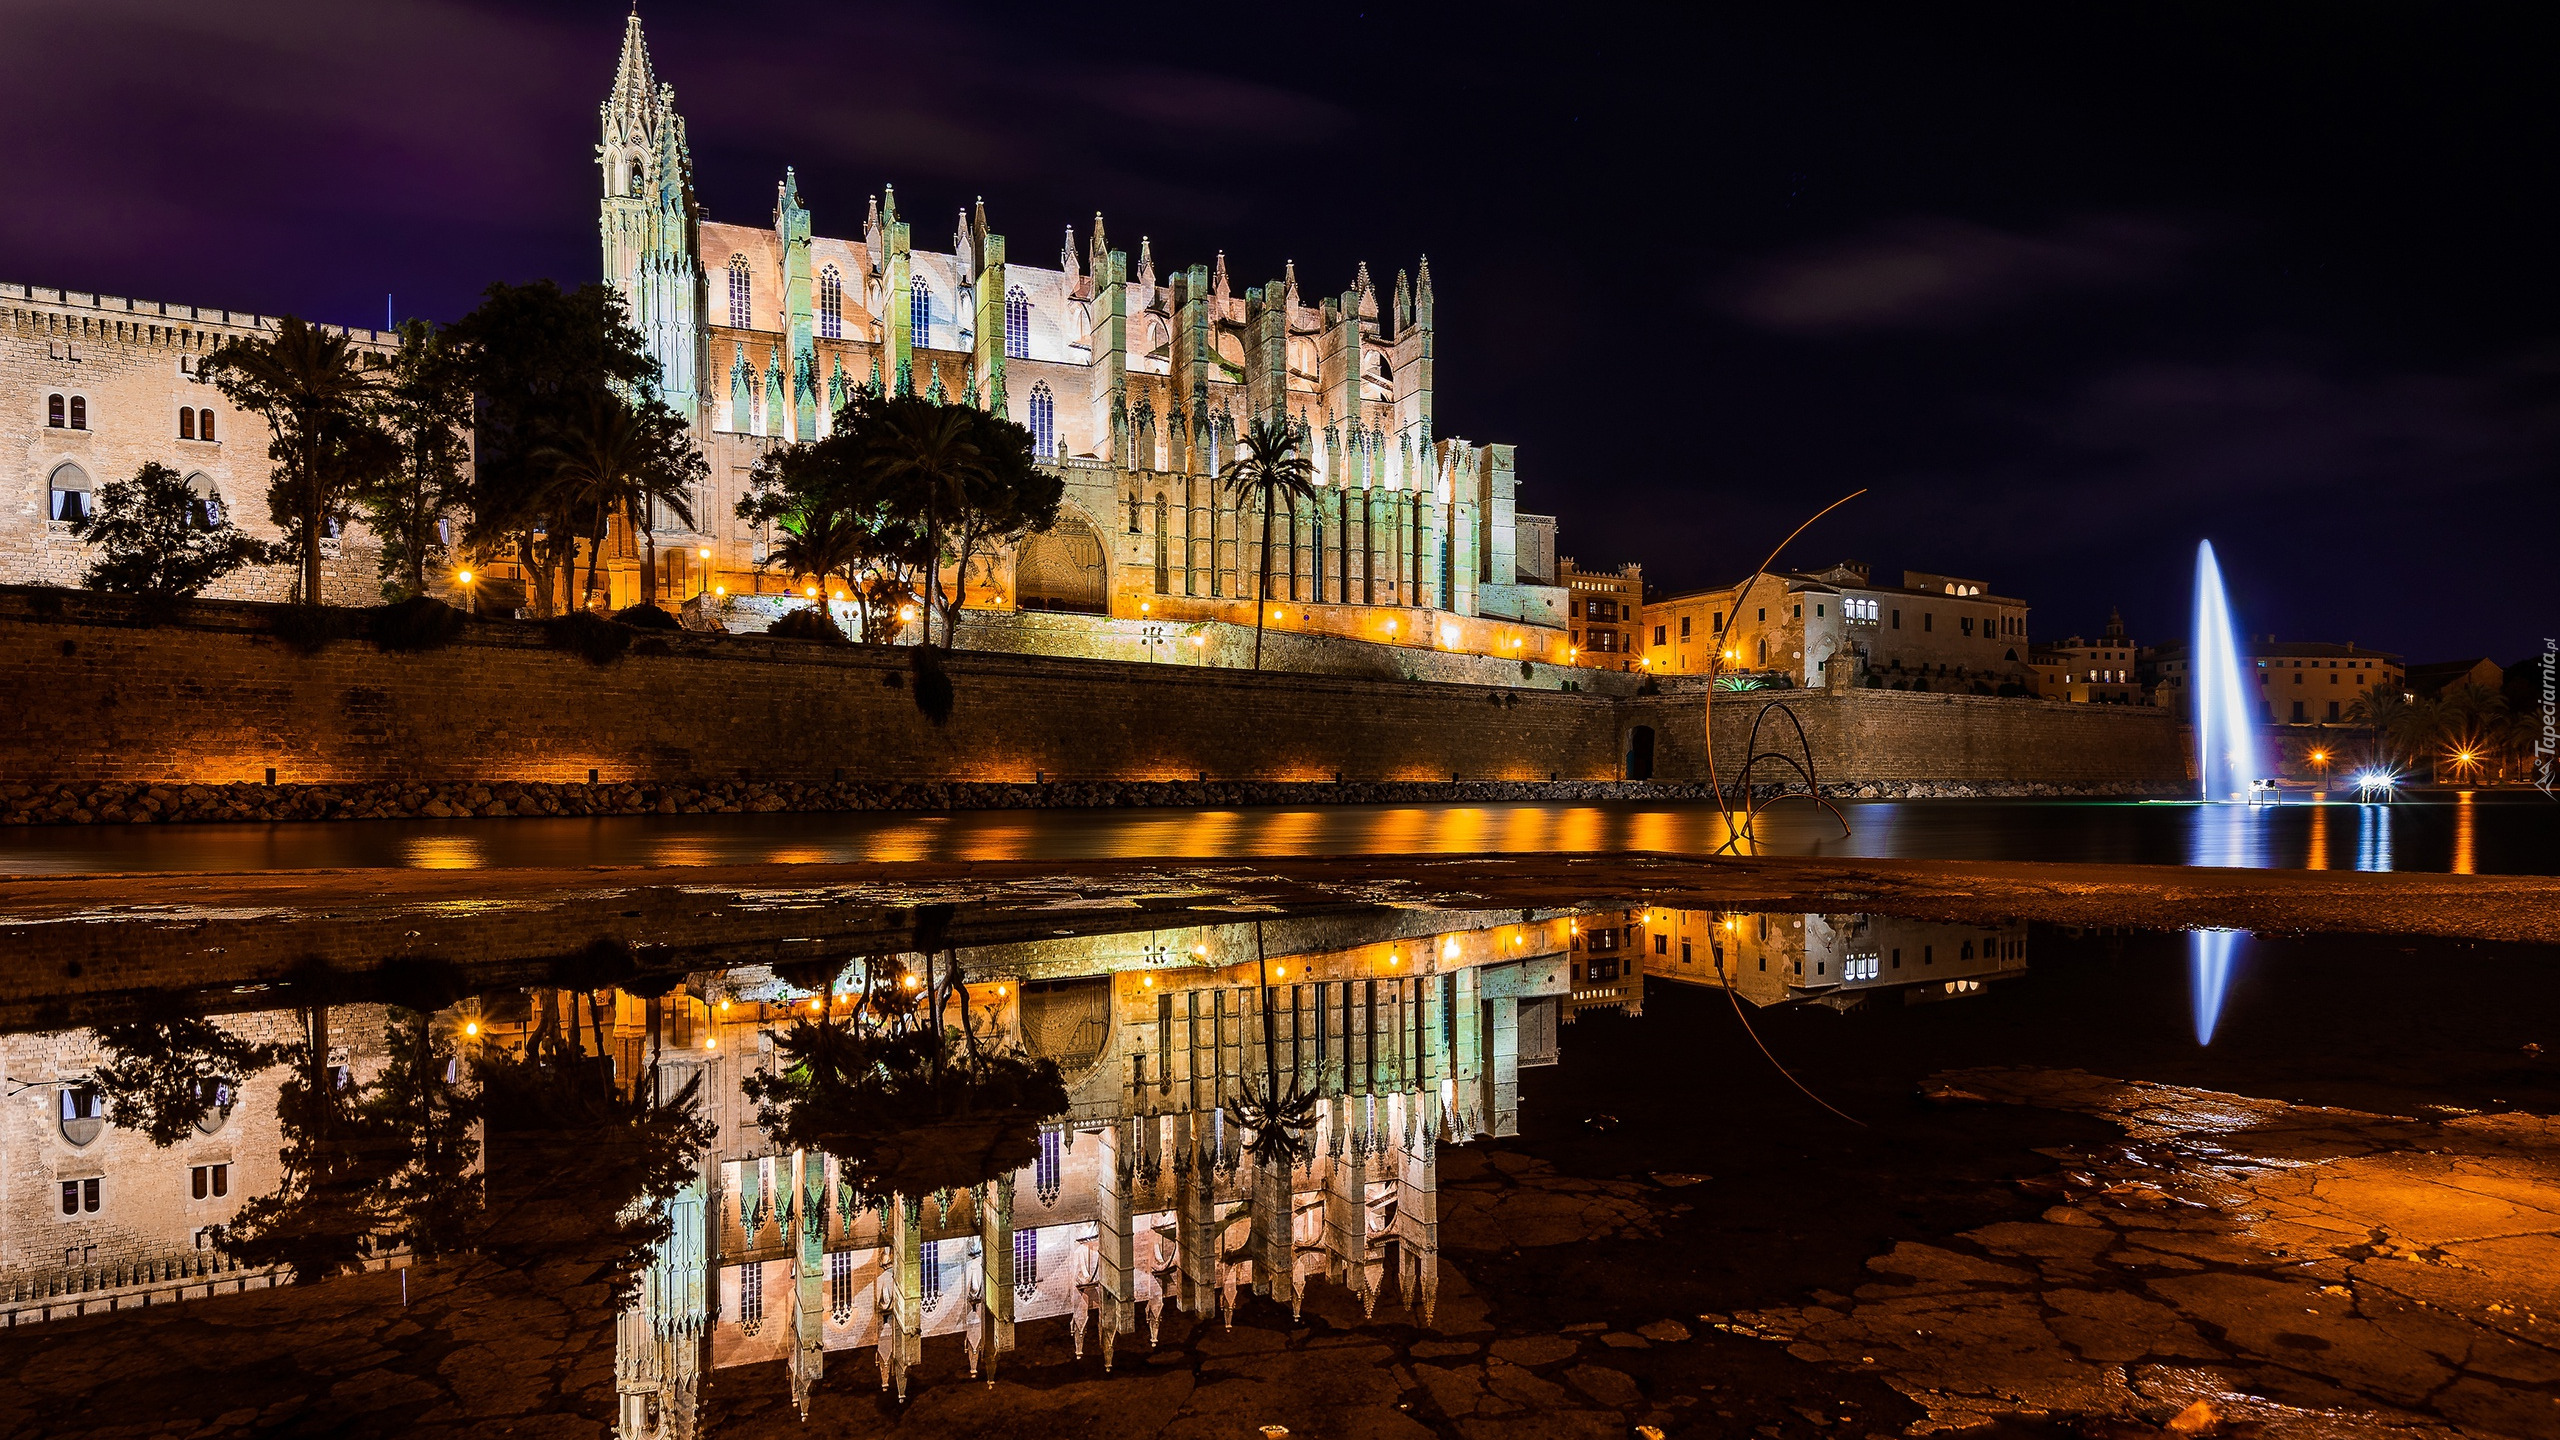 Oświetlona, Katedra La Seu, Kościół, Noc, Odbicie, Palma de Mallorca, Majorka, Hiszpania